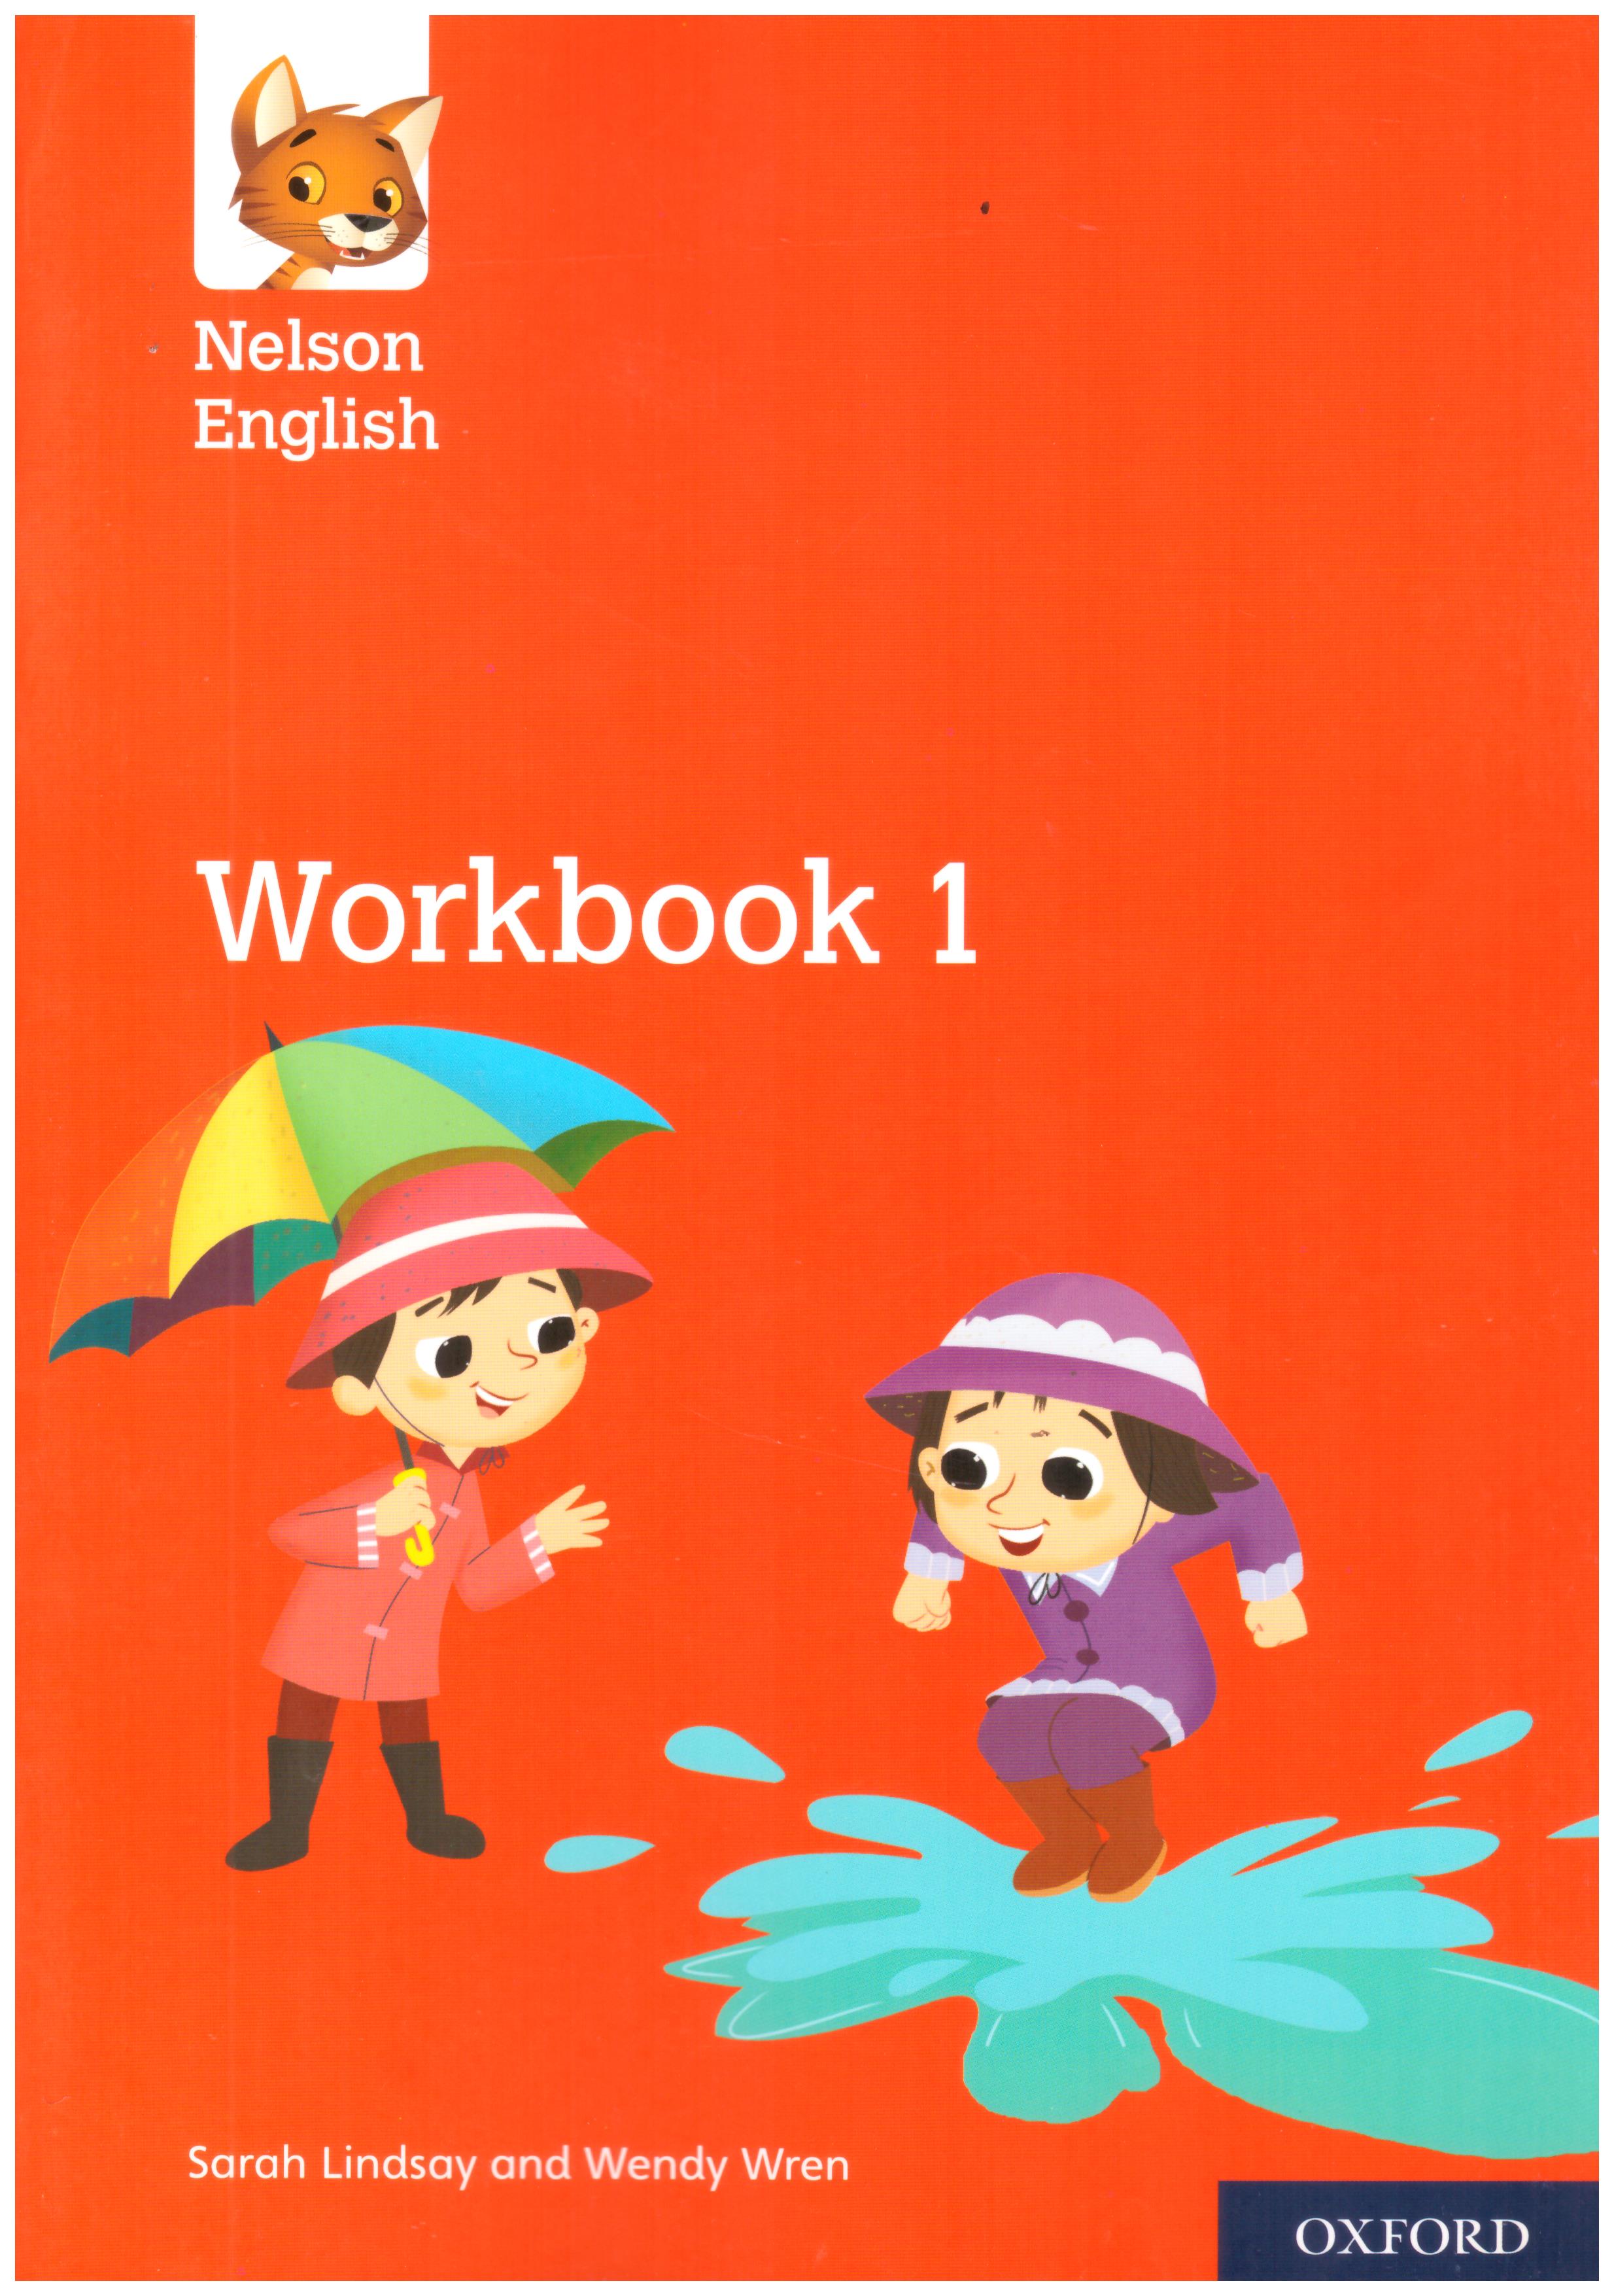 Nelson English Workbook 1